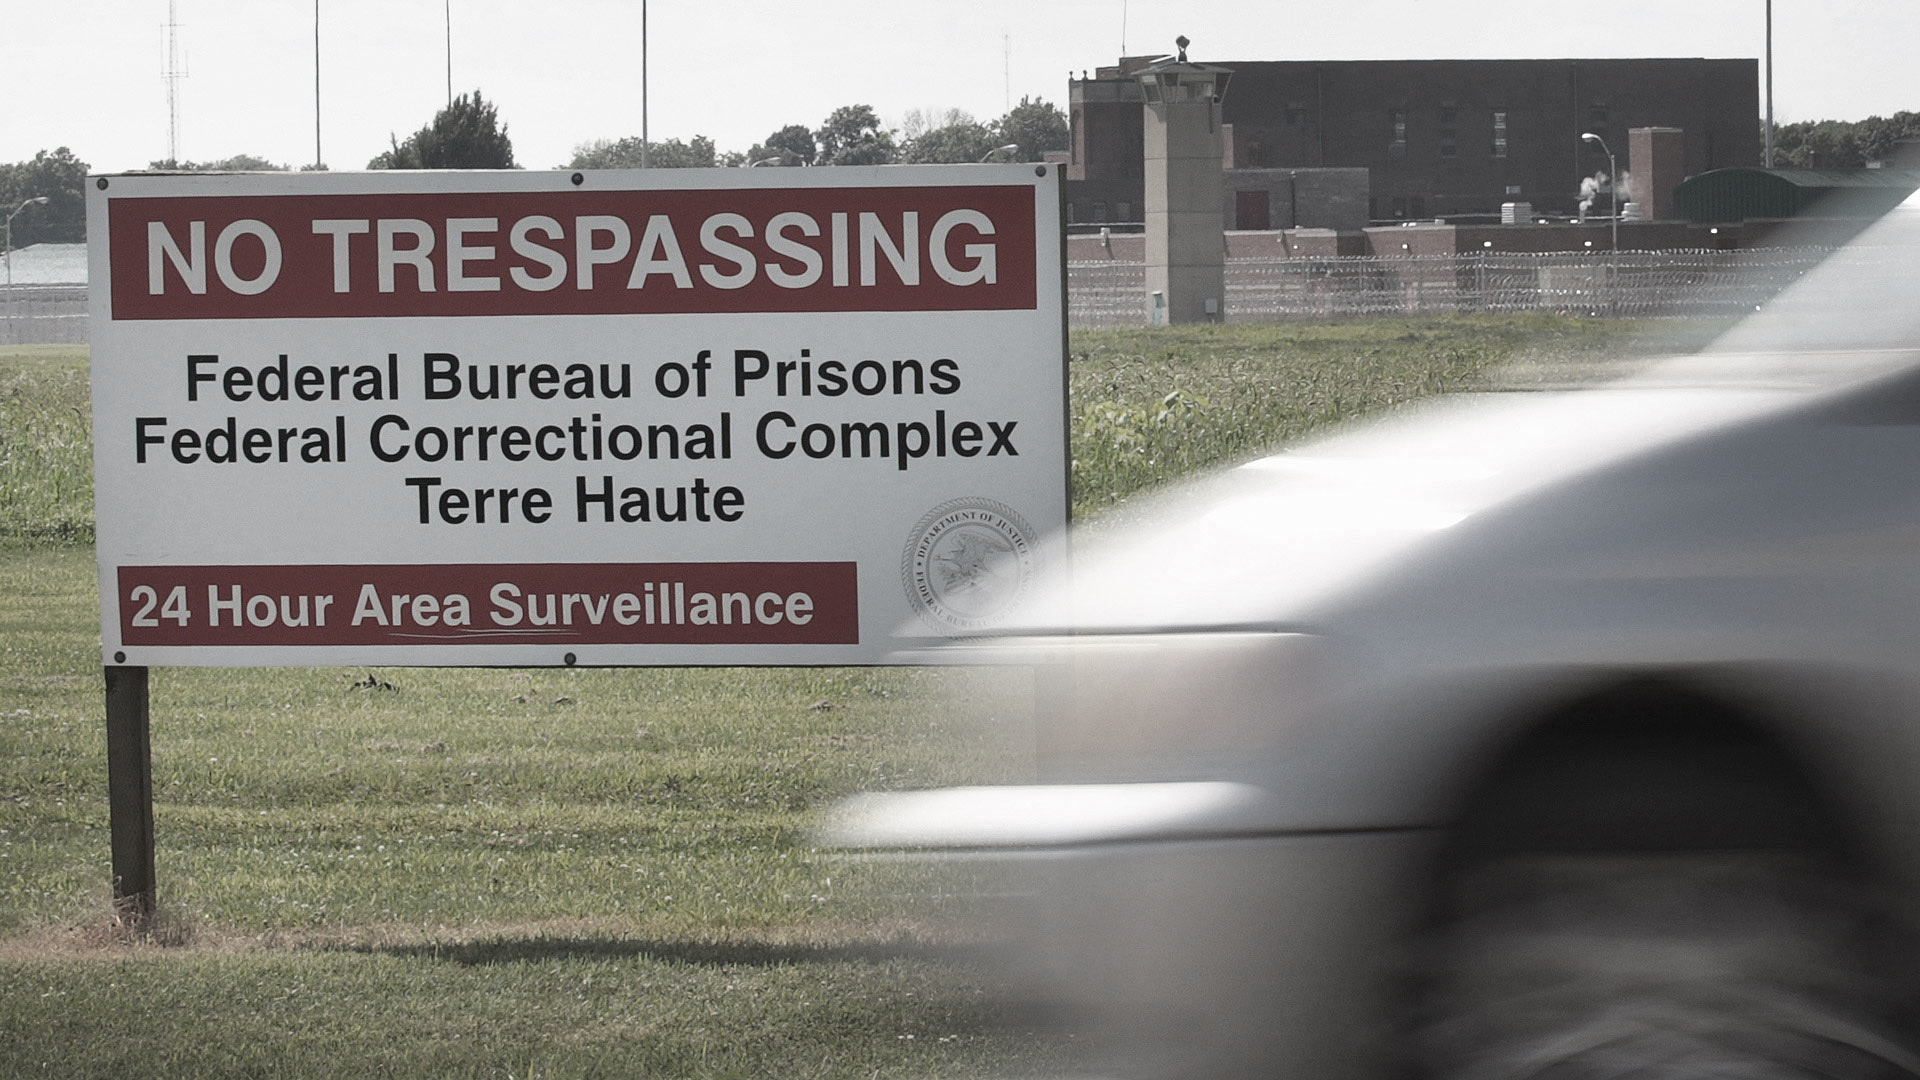 Terre Haute Prison, Indiana, US